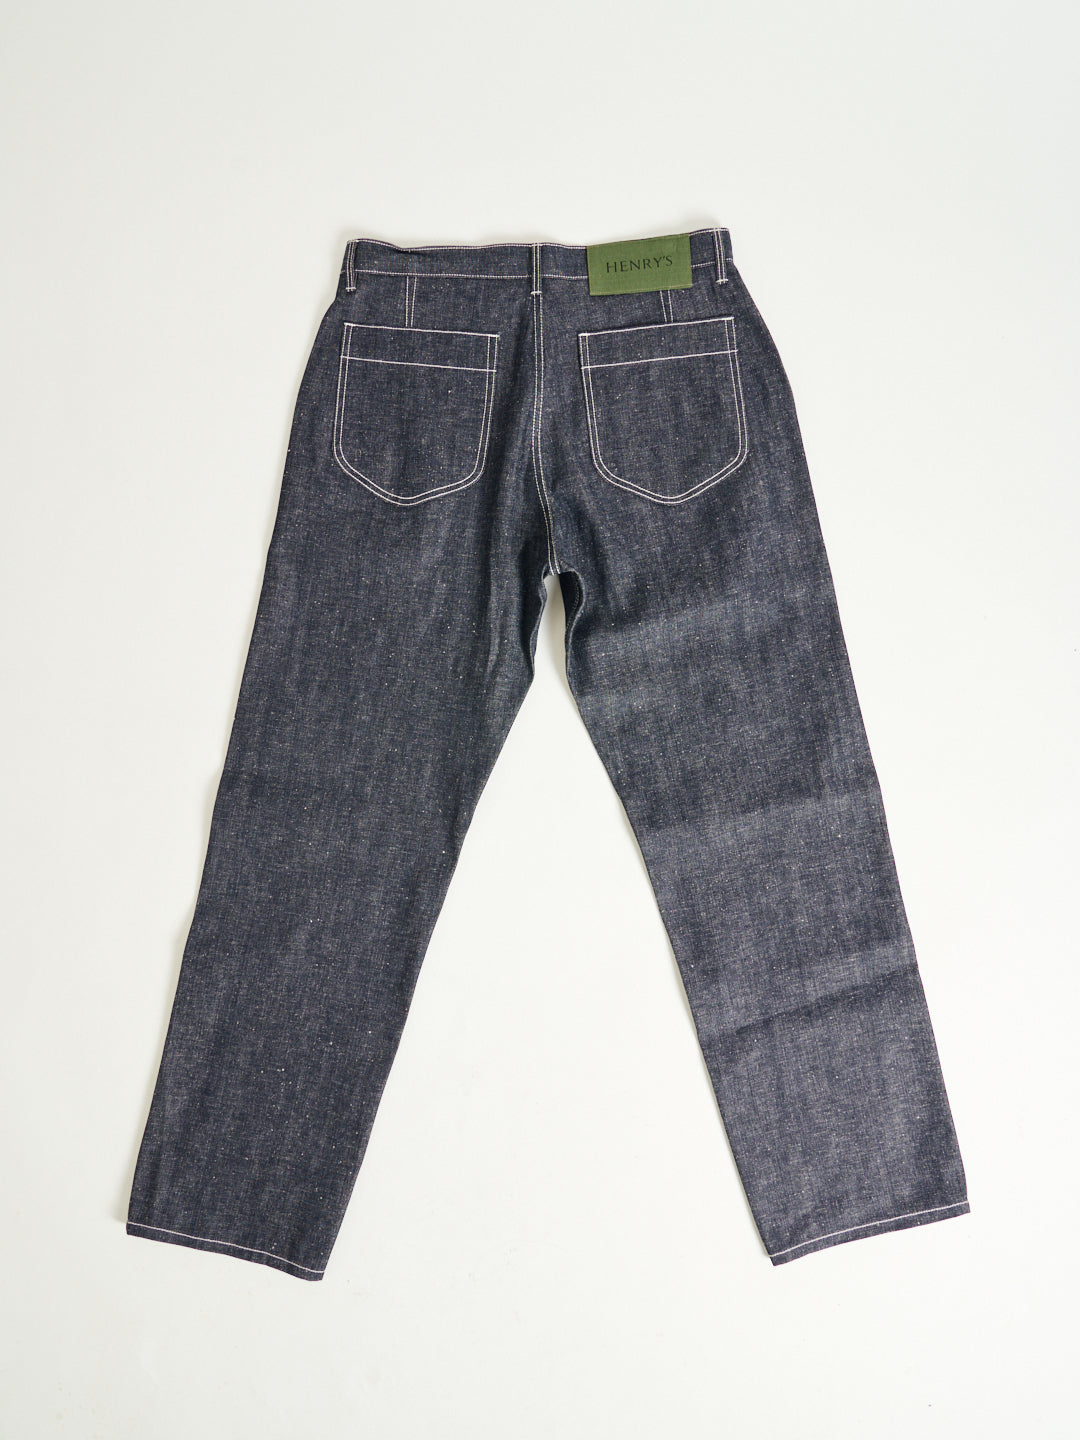 Henry's Patch Jeans - Indigo Denim